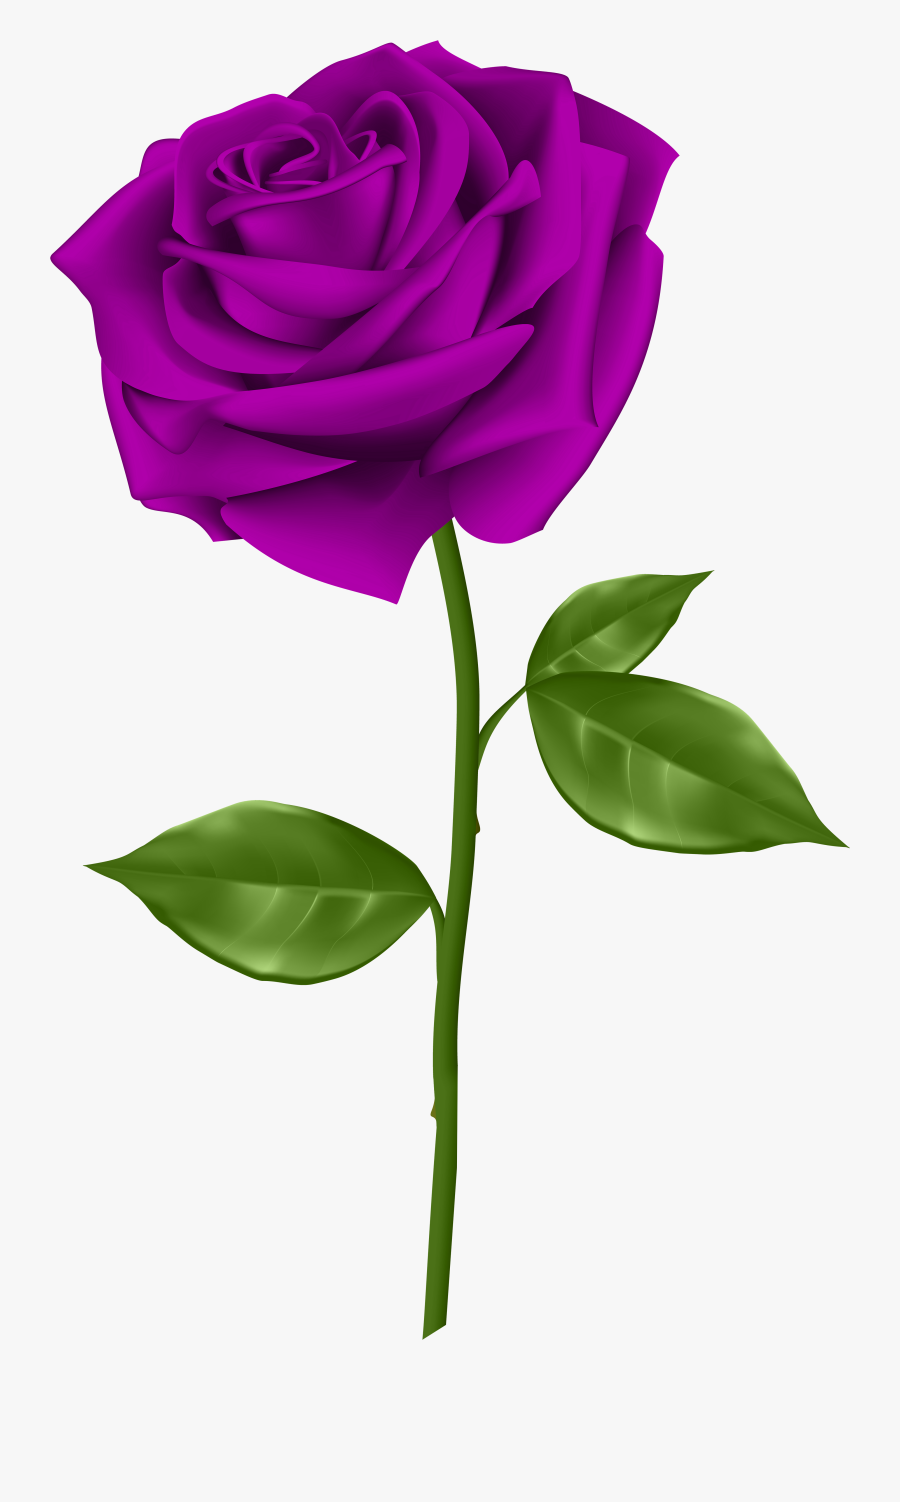 Clipart Free Download Clip - Transparent Background Purple Rose Clipart, Transparent Clipart